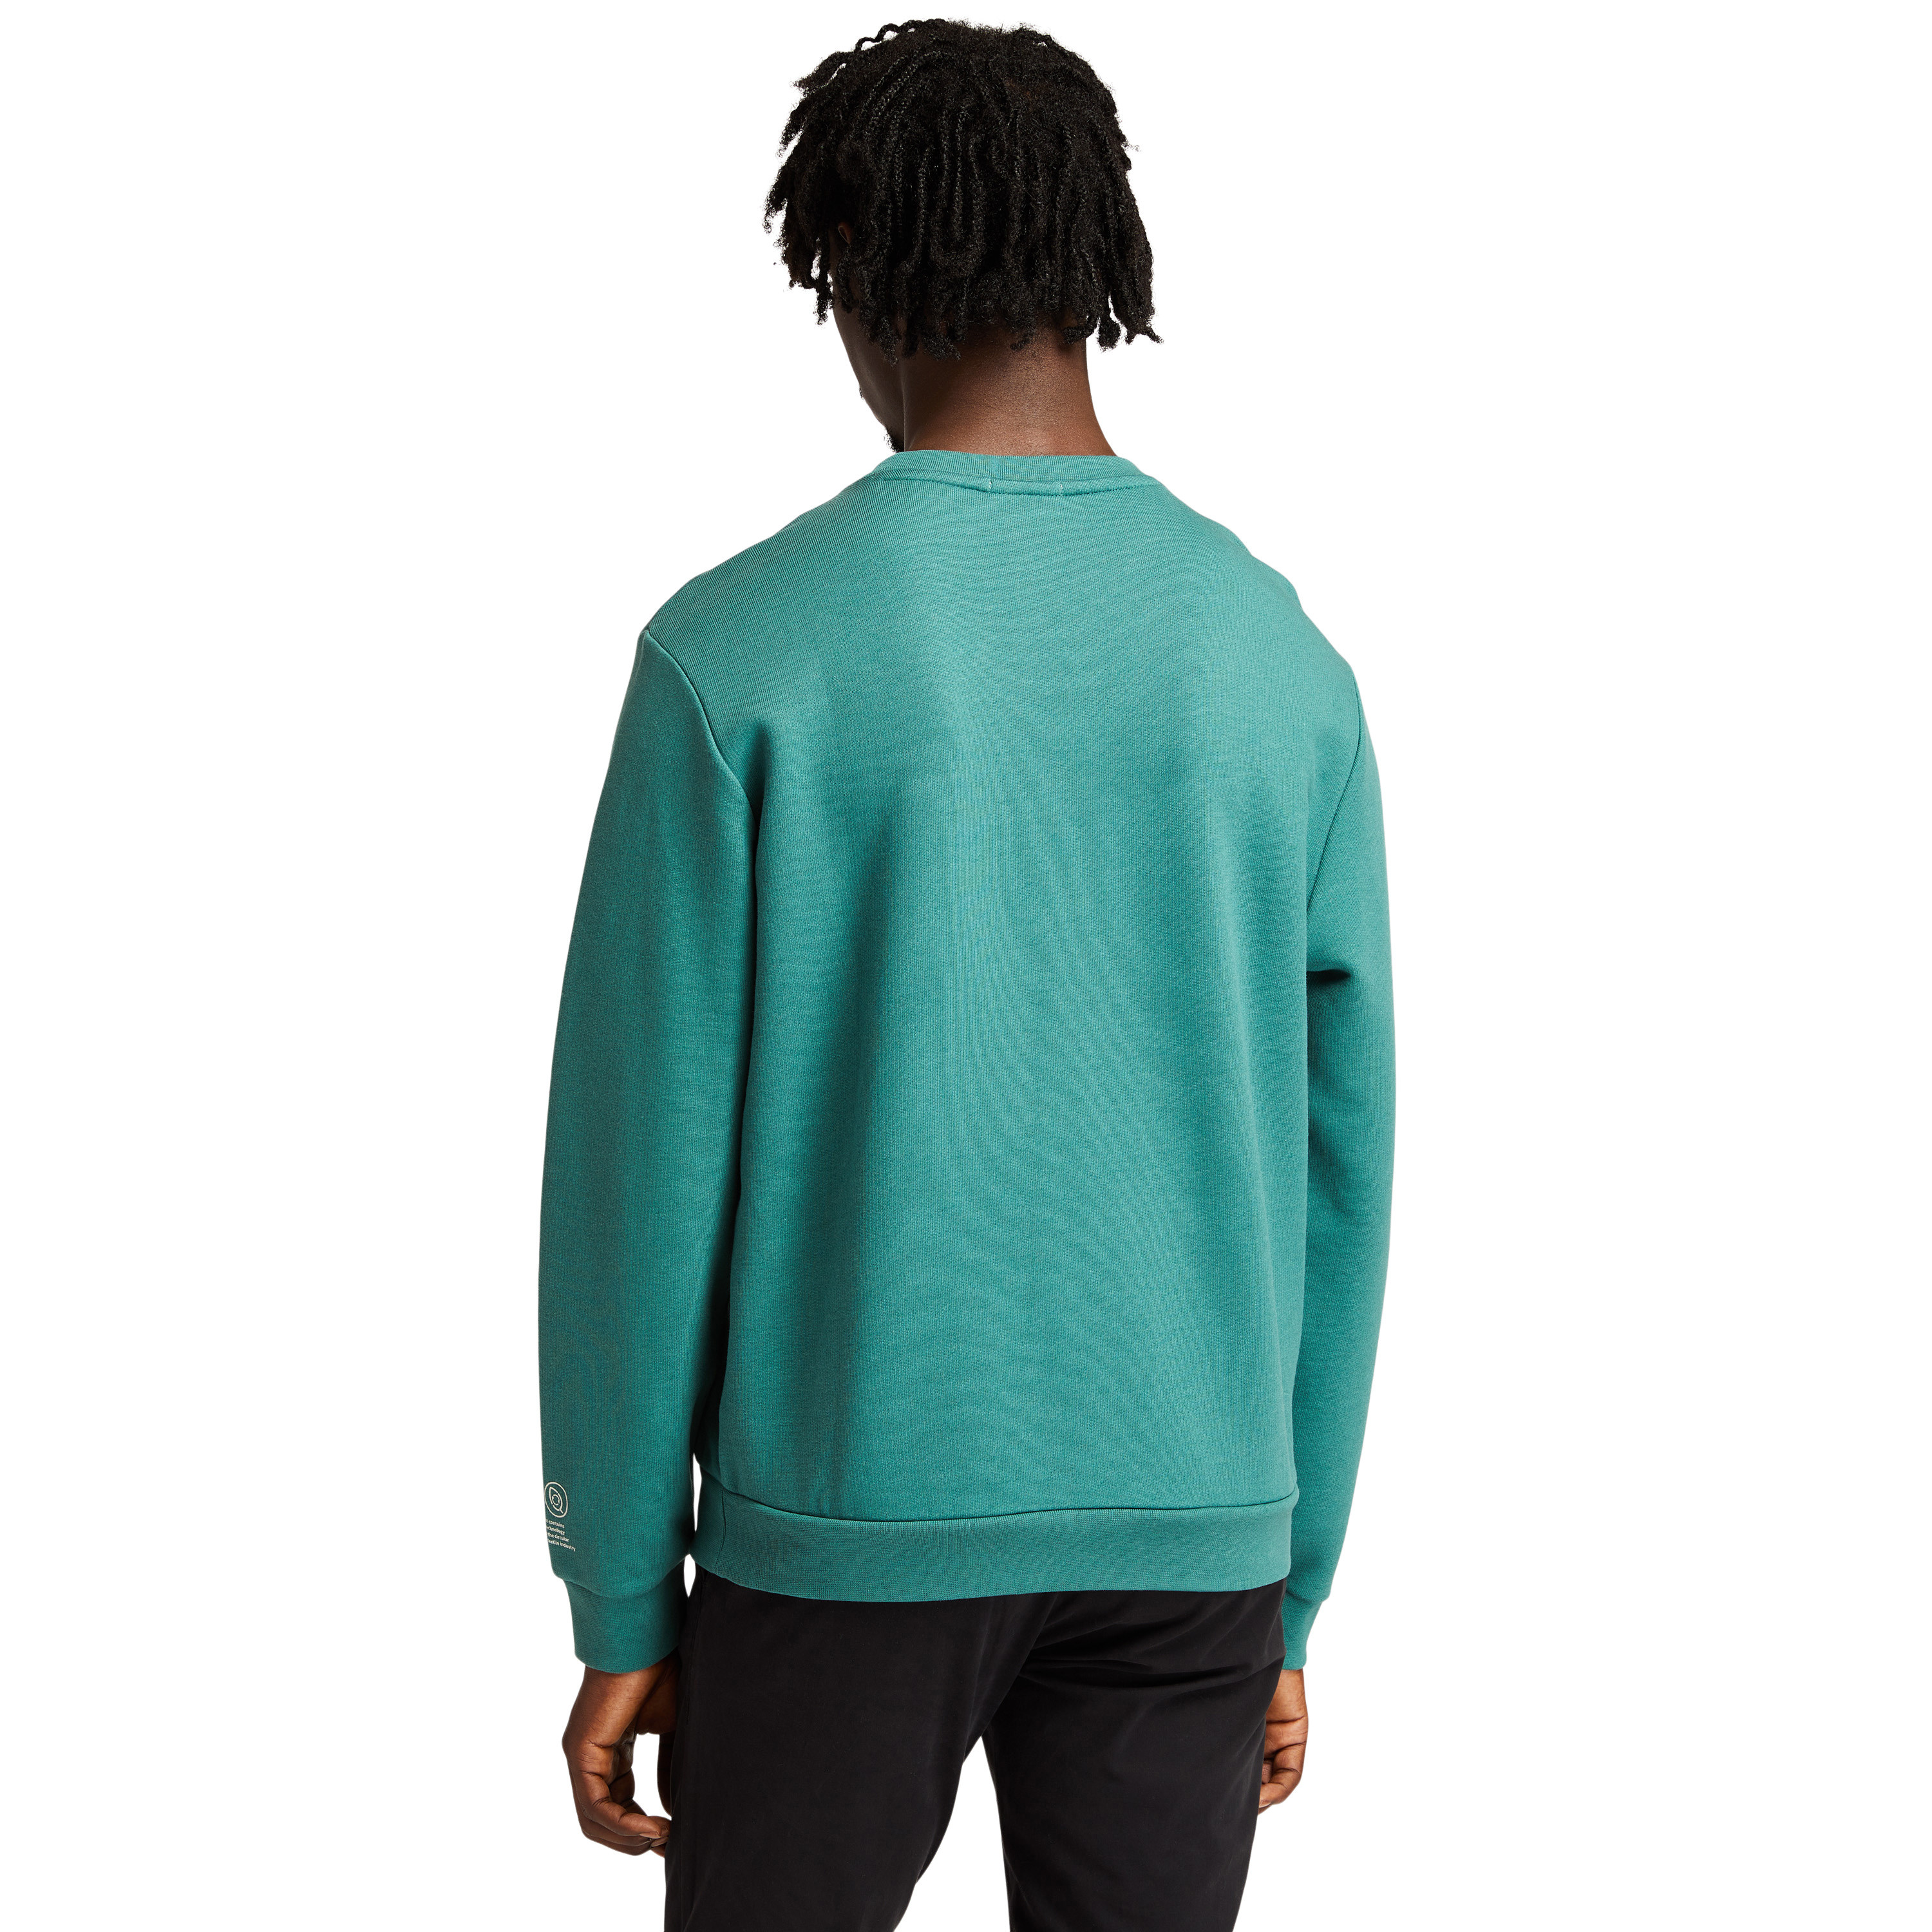 Re-Comfort EK+ sweatshirt for men, Green, large image number 4